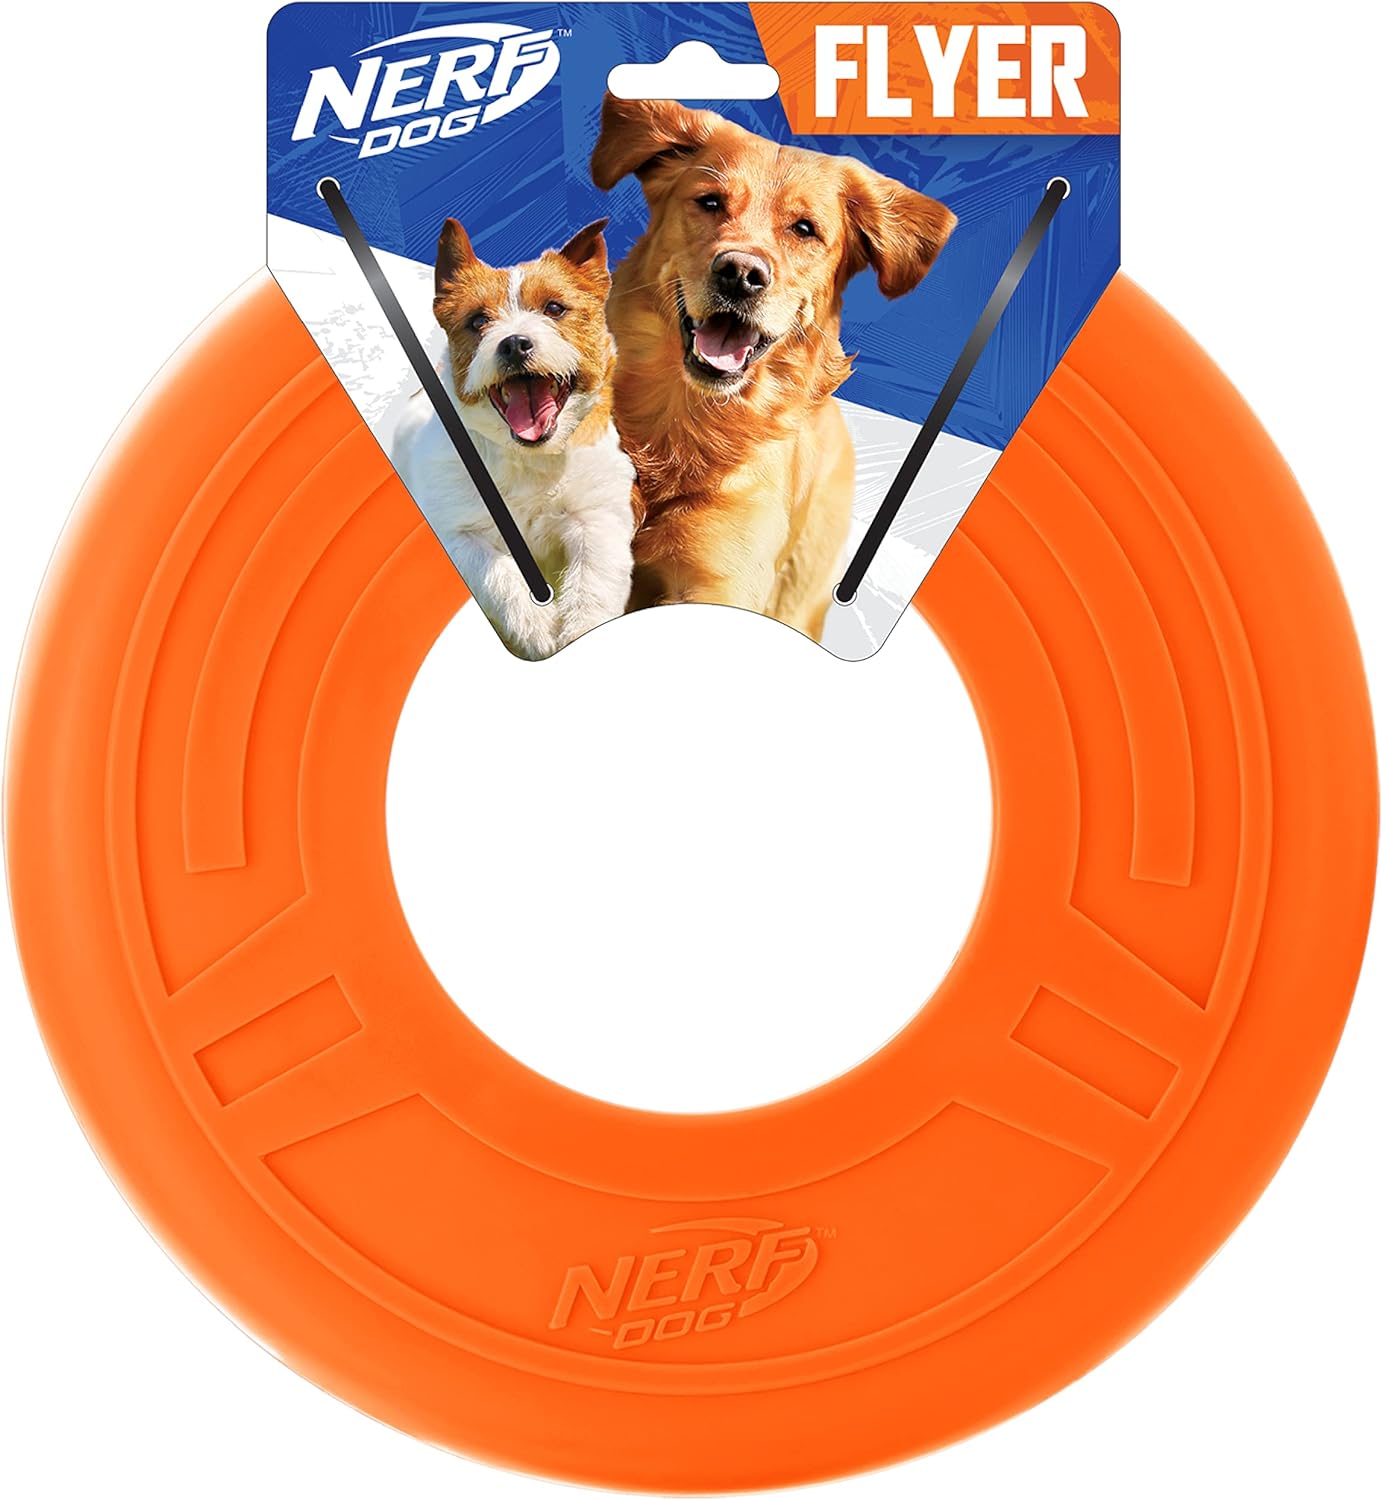 Nerf Dog 10in Atomic Flyer - Orange